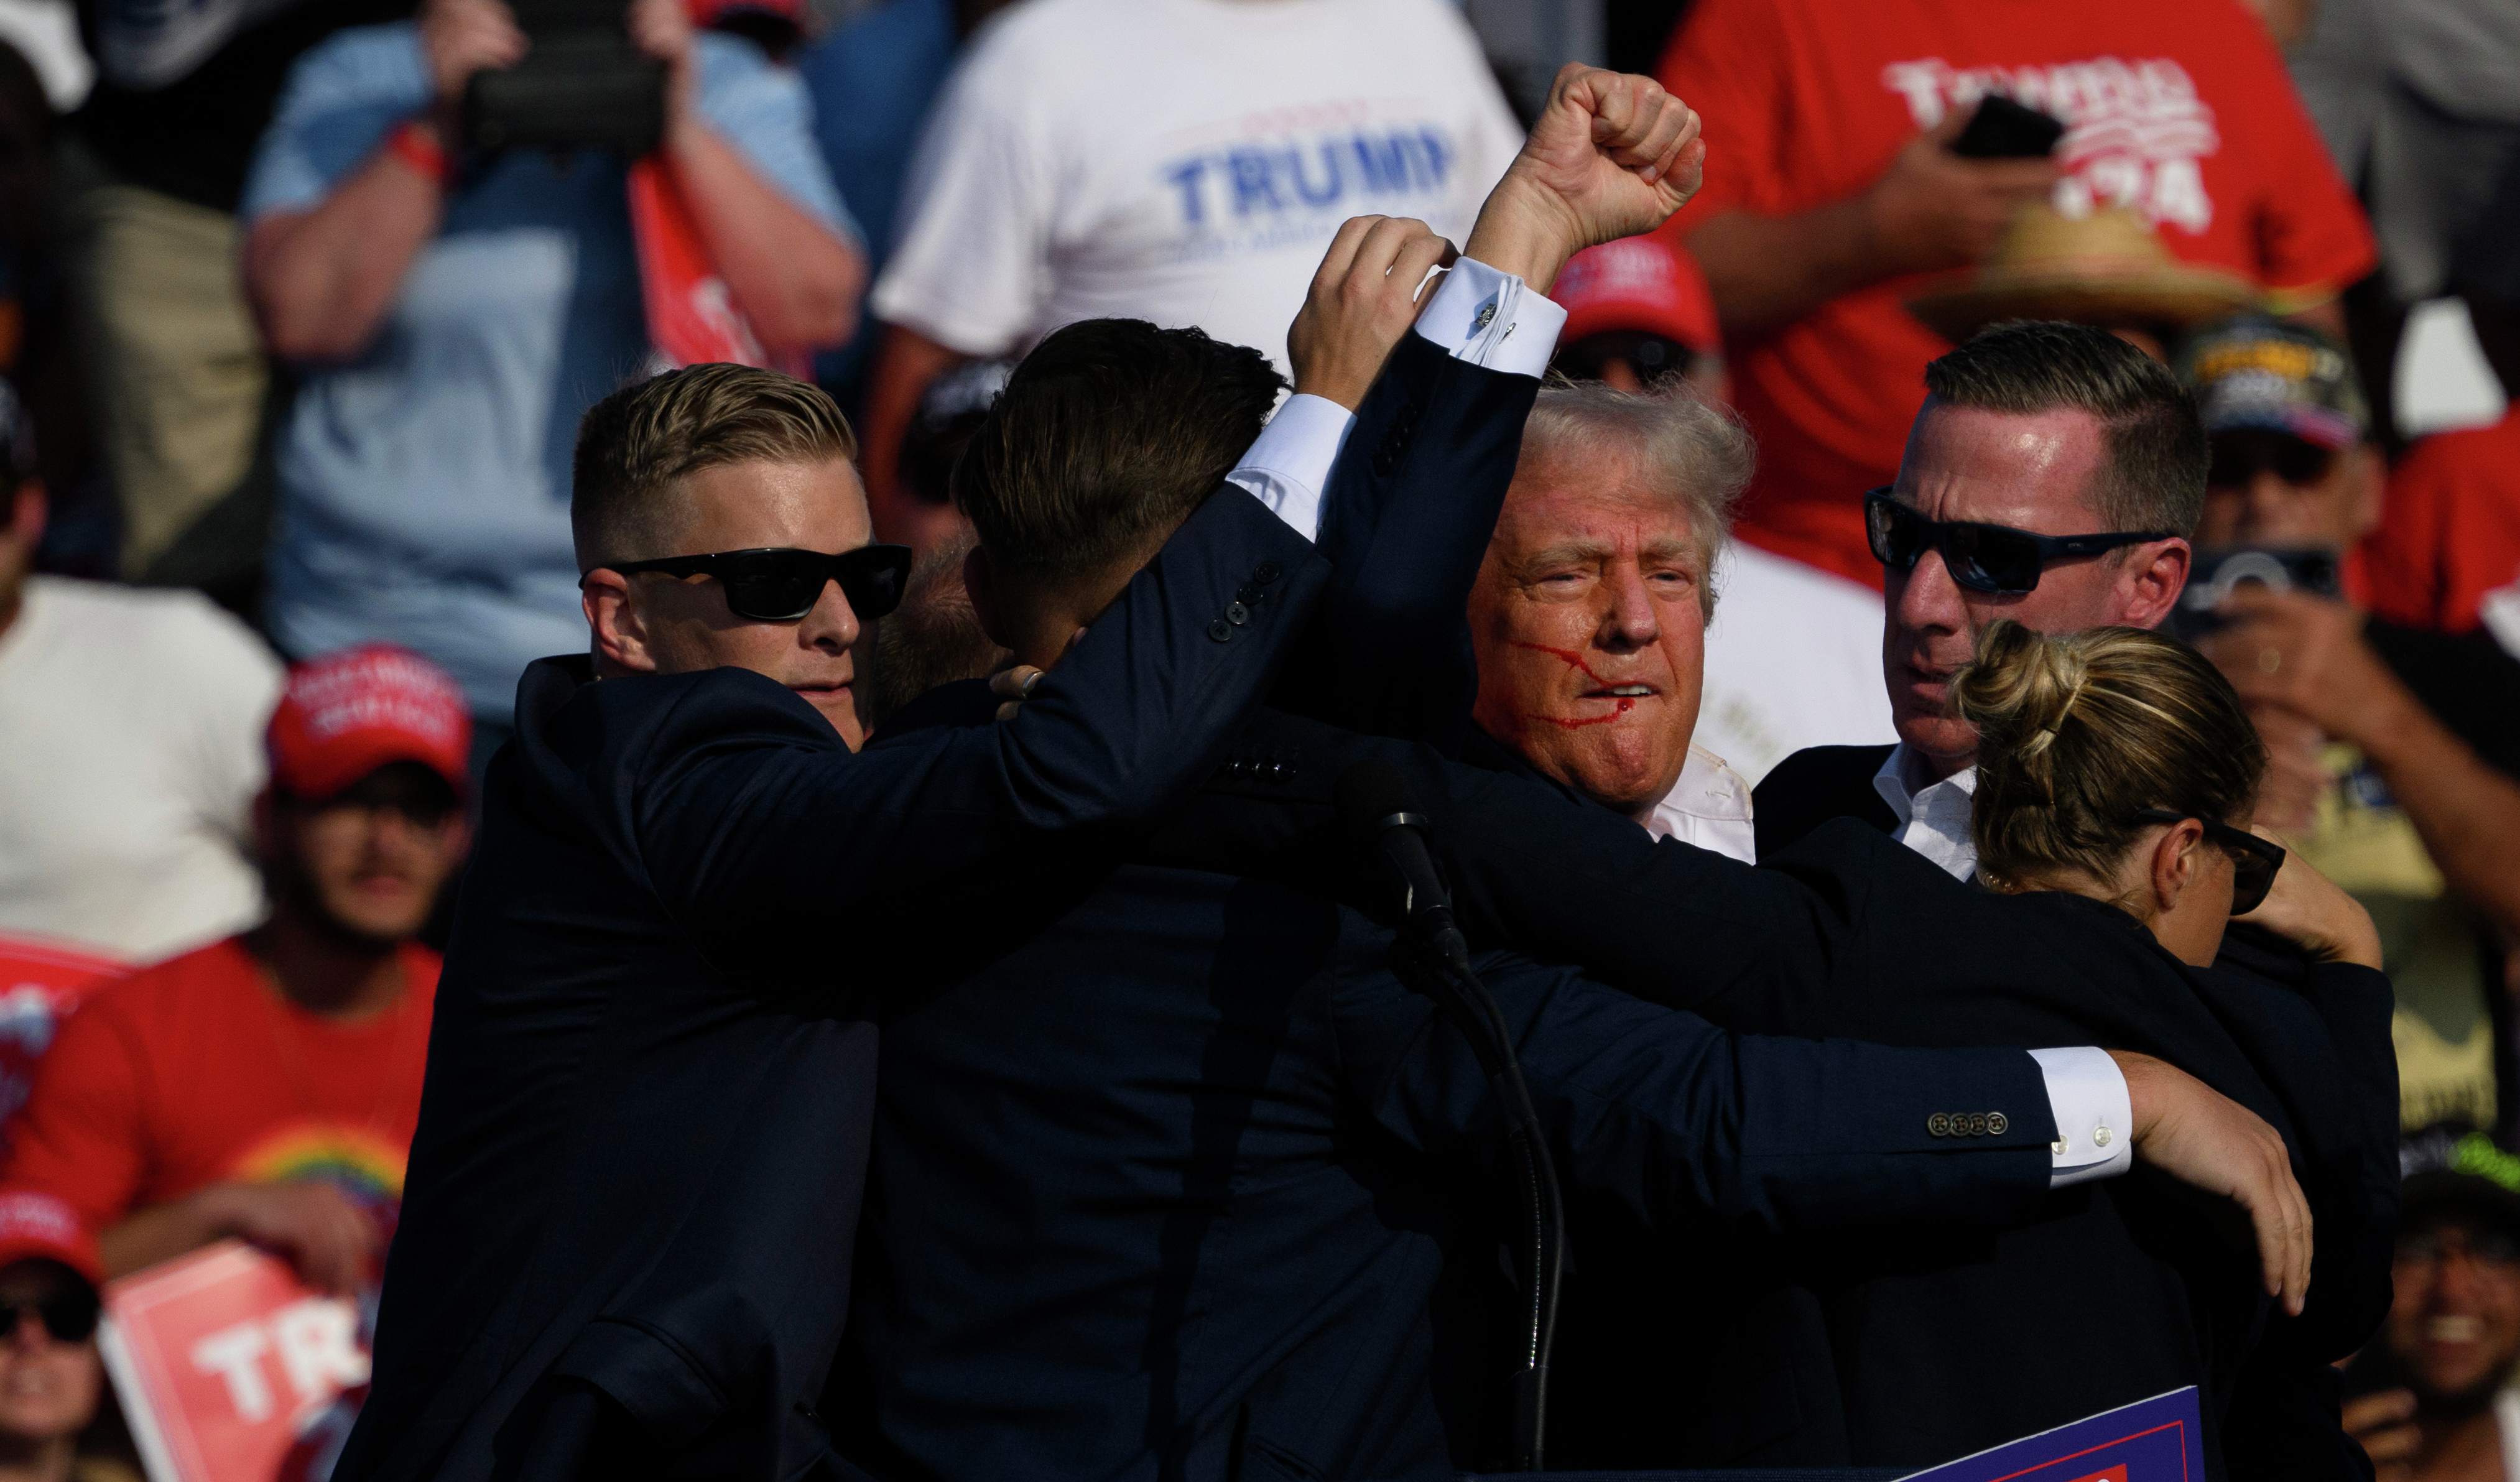 NEWSLINE: Inside the Trump rally shooting